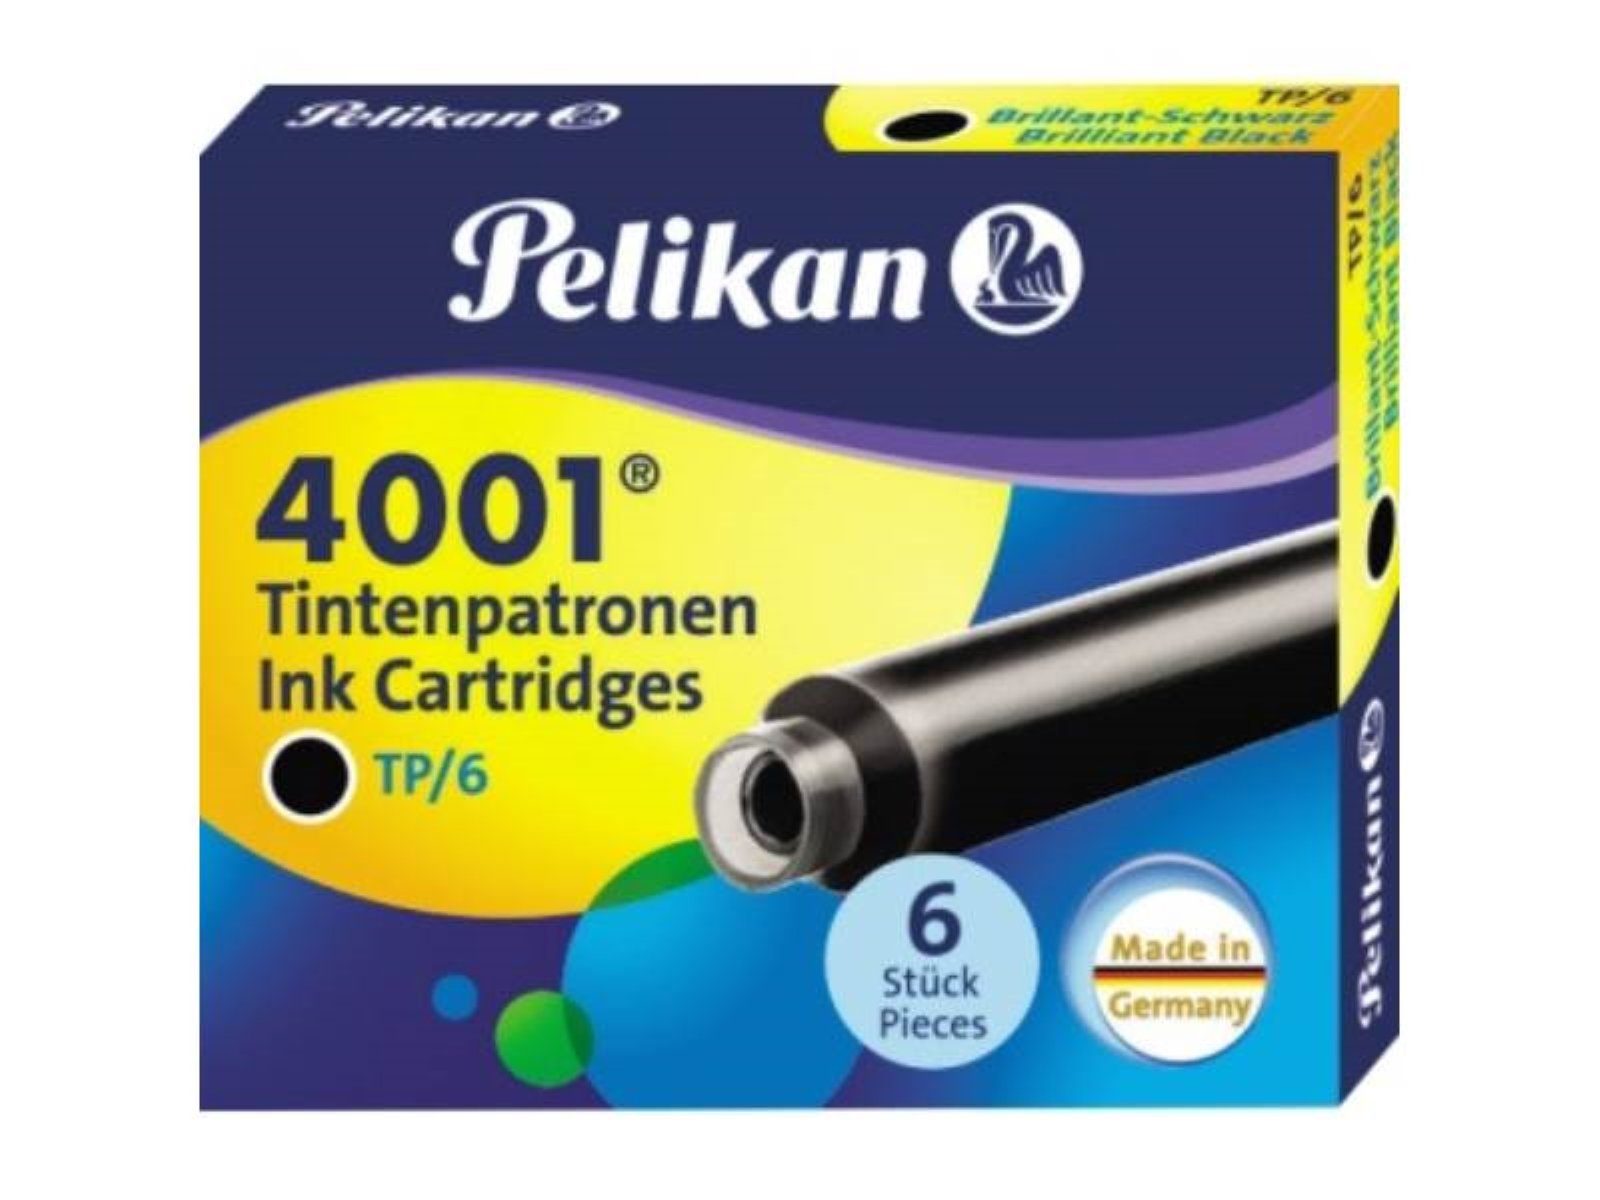 Pelikan Tintenpatrone brillantschwarz Tintenpatrone 301218 6 St./Pack. TP/6 4001 Pelikan Pel